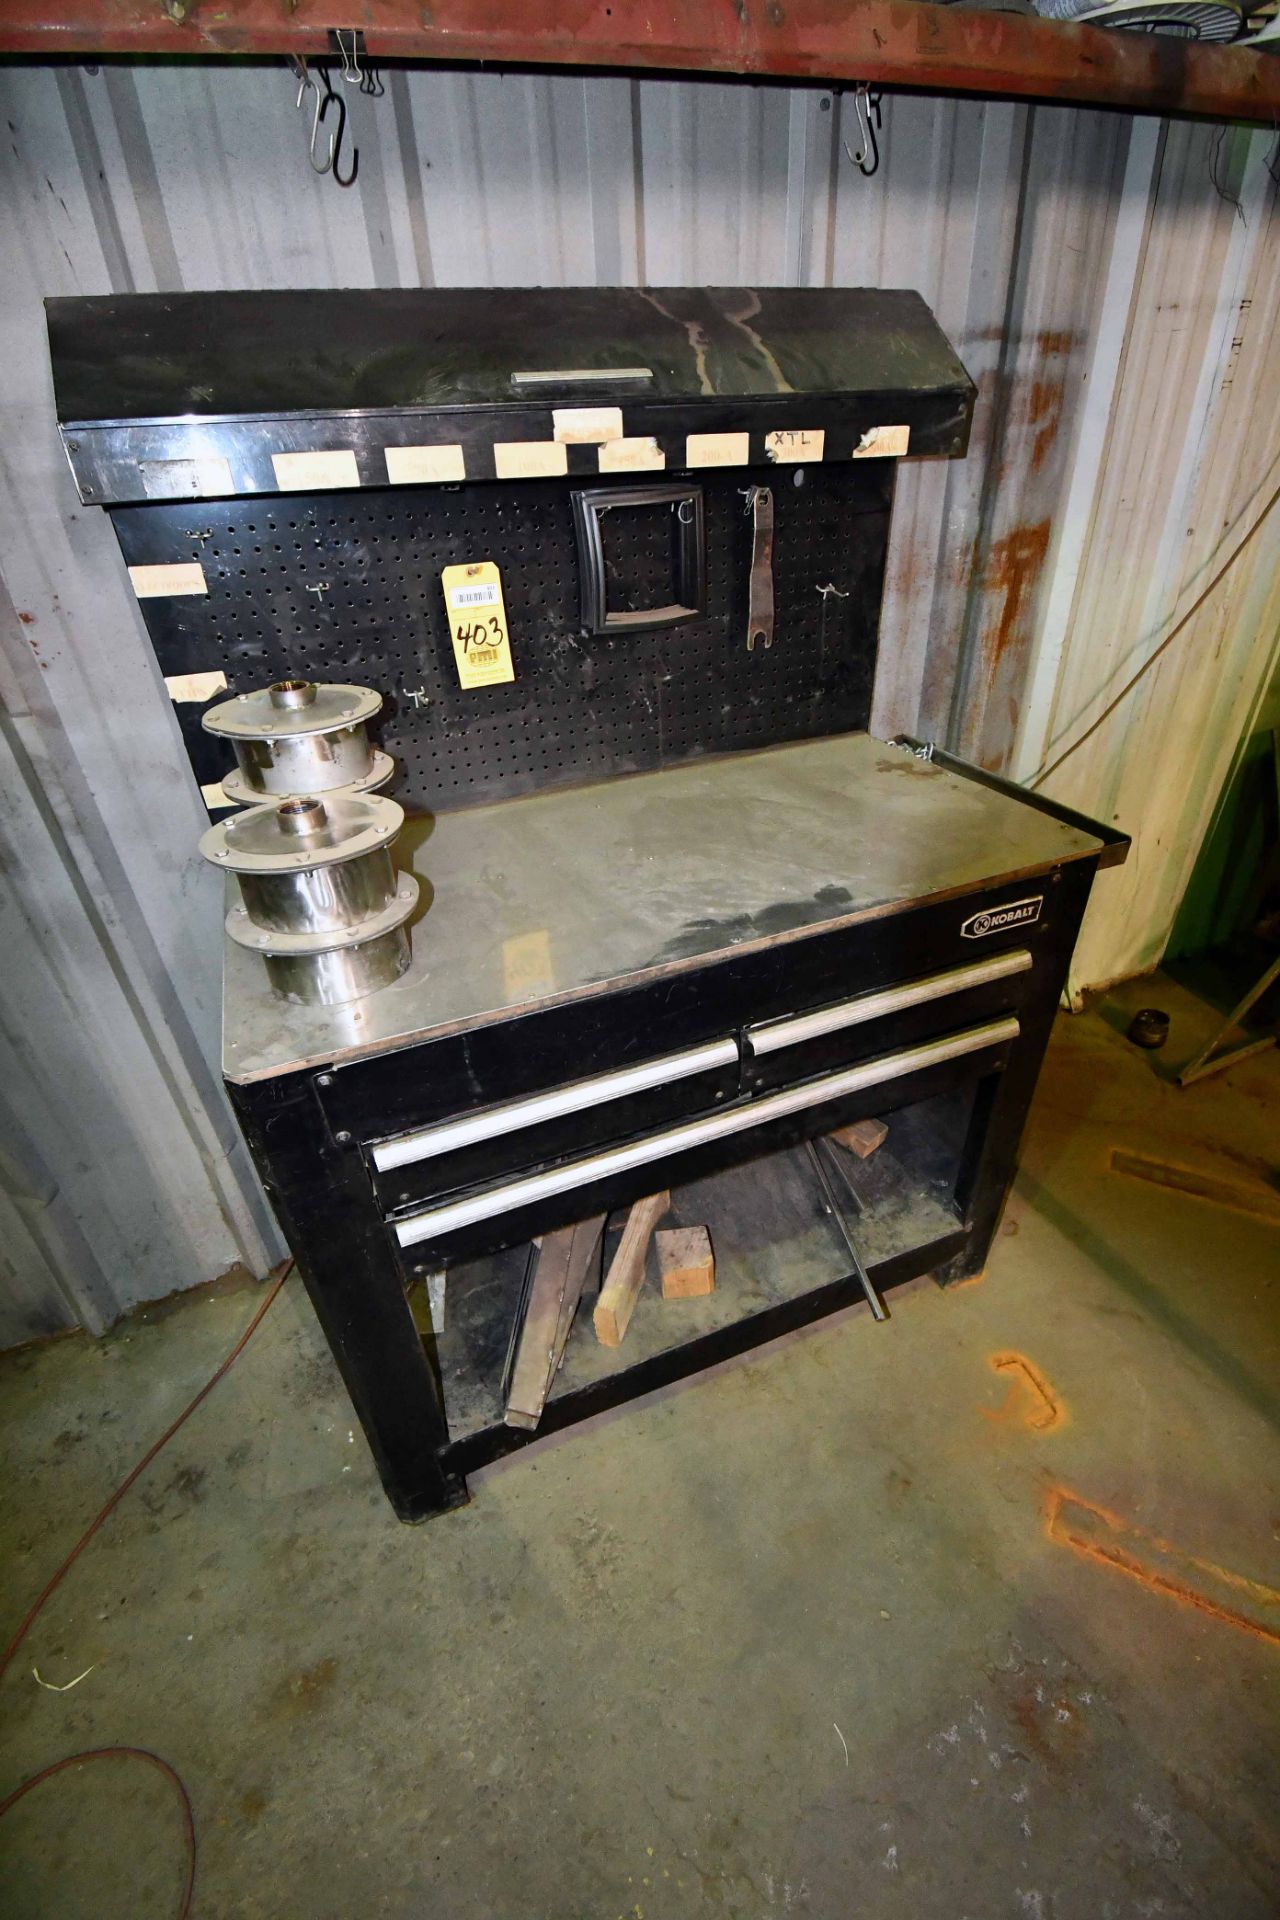 LOT CONSISTING OF: Kobalt 3-drawer workbench & metal shelf w/ contents